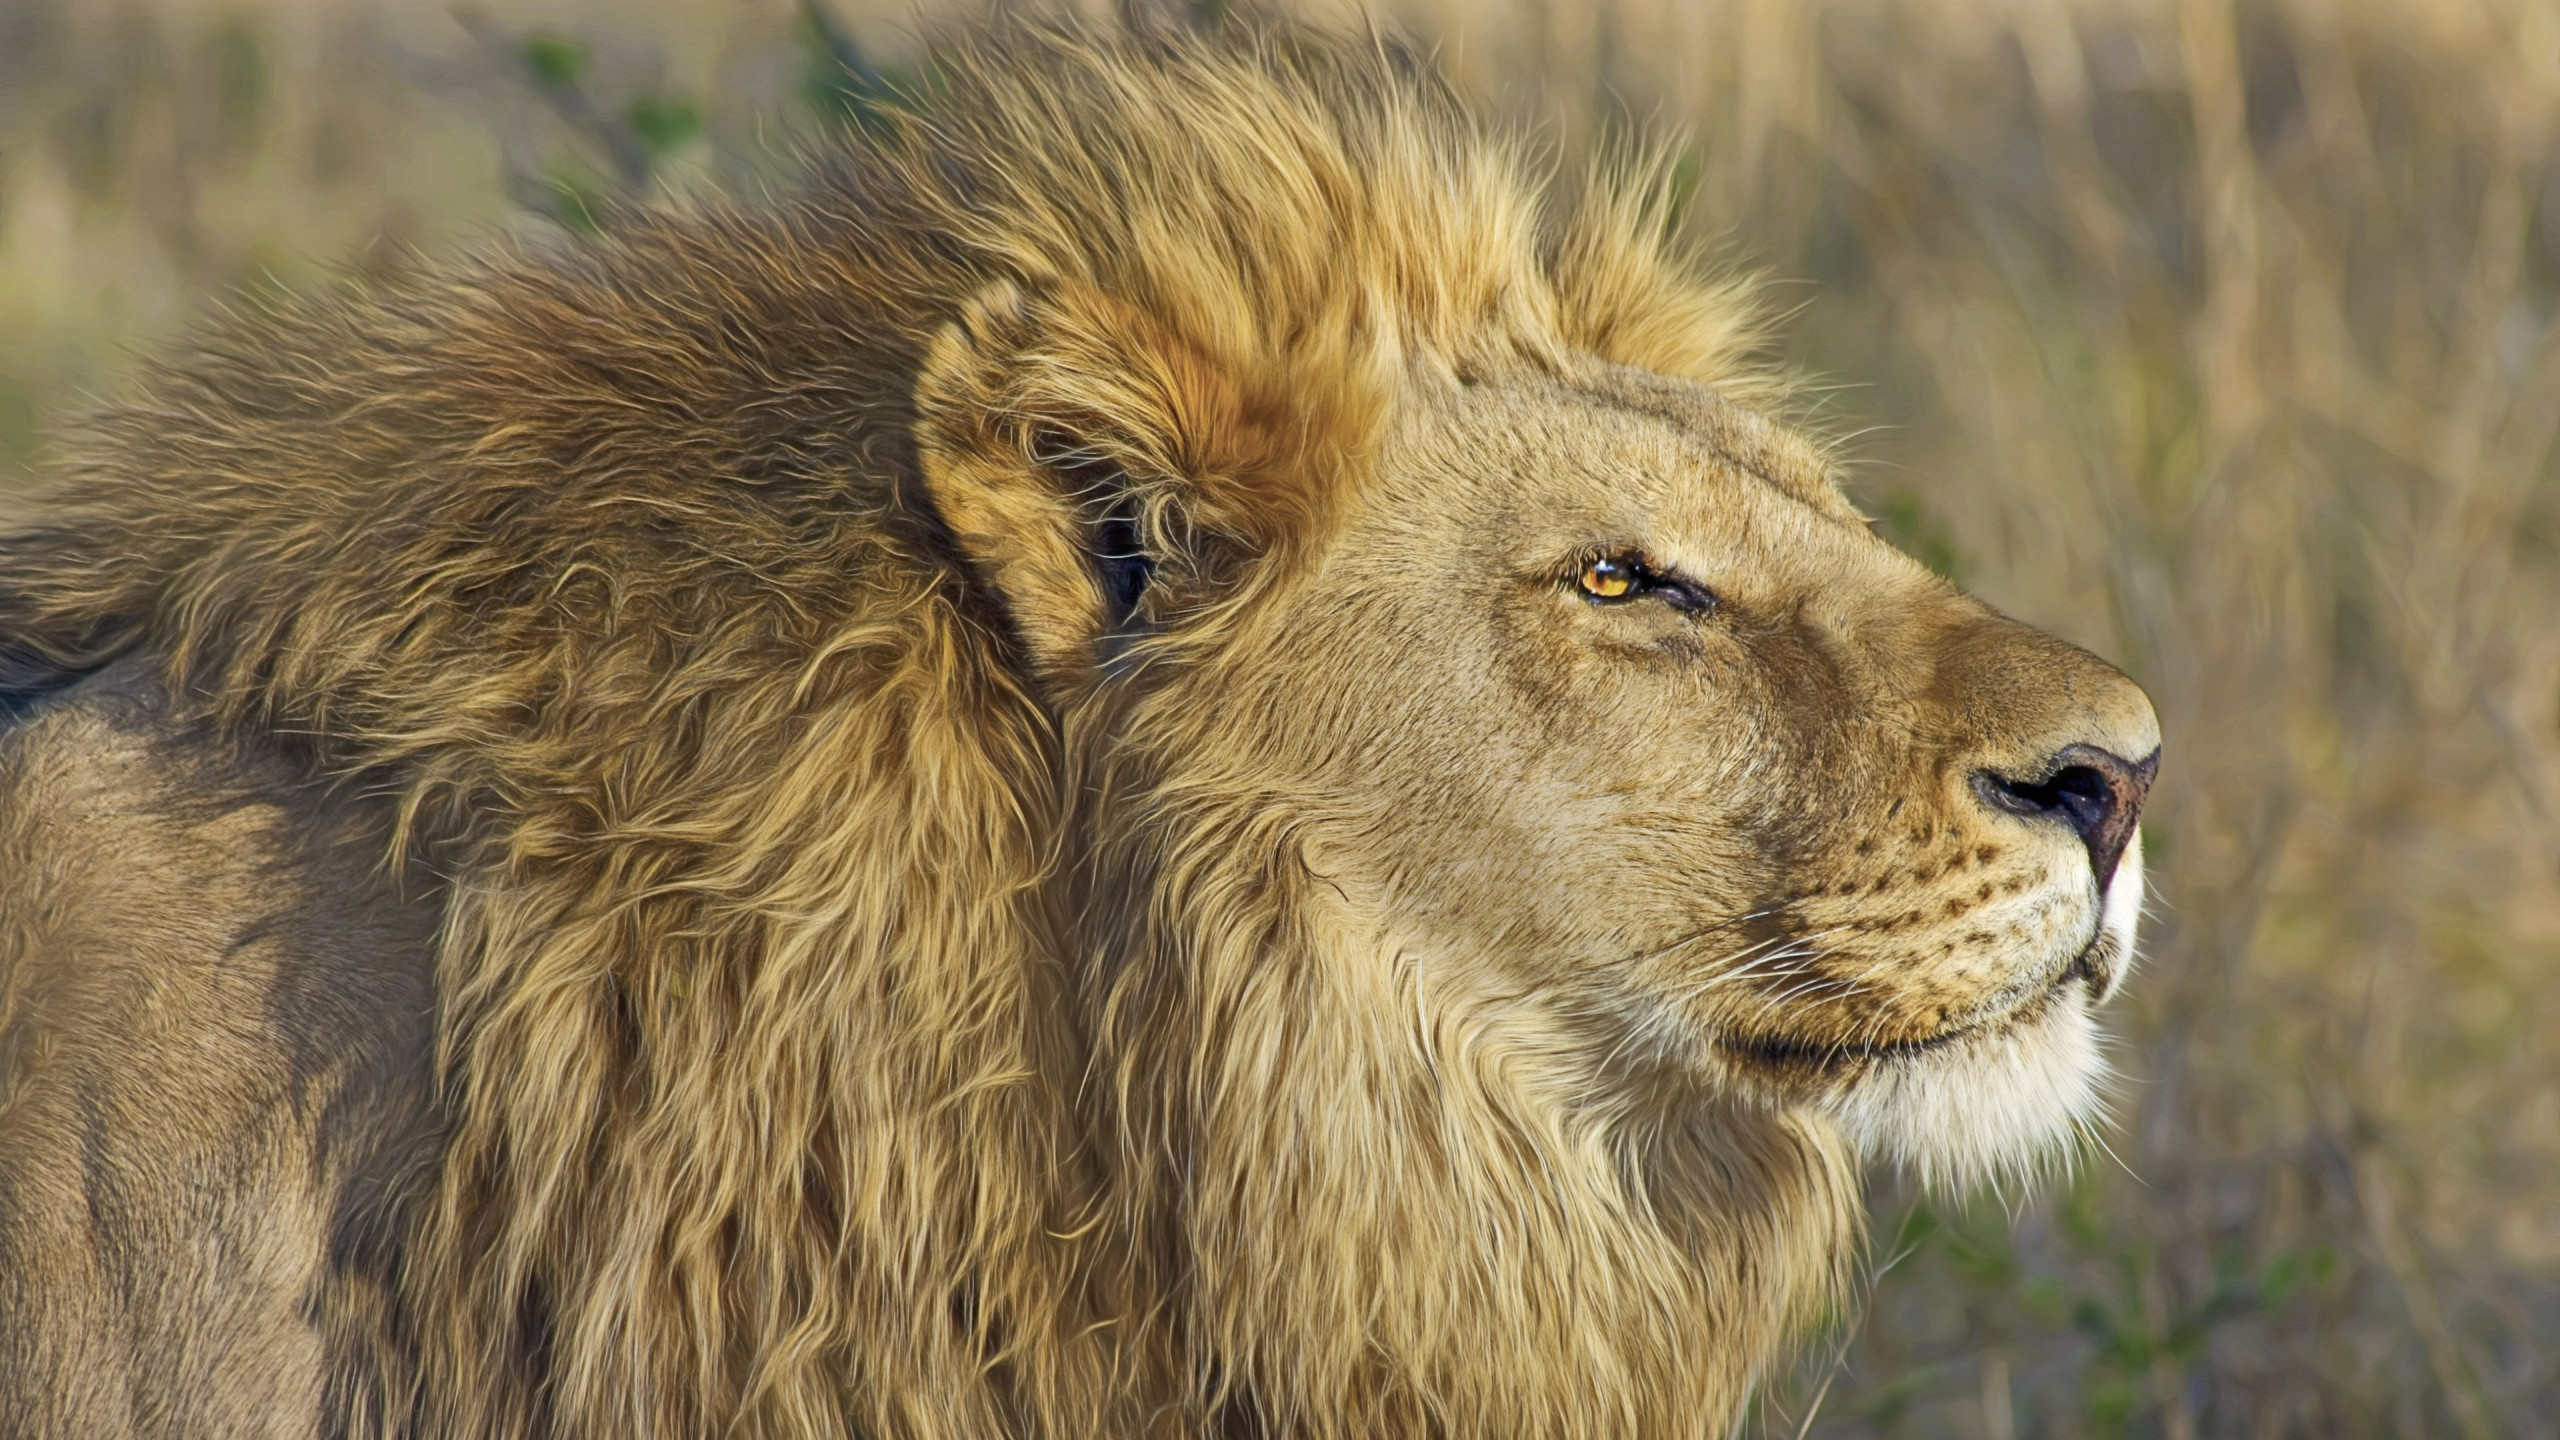 One lion king portrait wallpaper 2560x1440